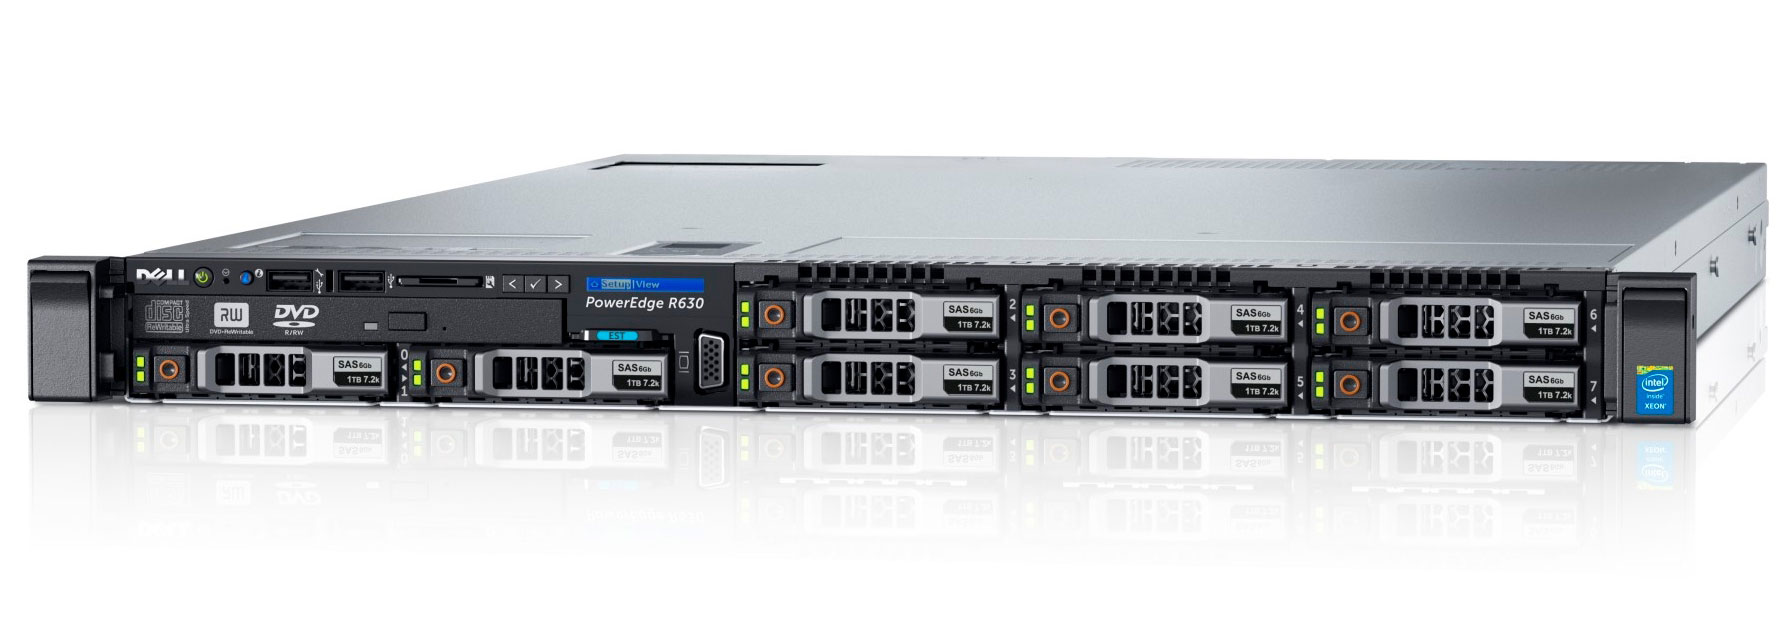 Подробное фото Сервер DELL PowerEdge R630 Xeon 2x E5-2683v3 128Gb 2133P DDR4 8x noHDD 2.5", SAS RAID Perc H730, 1024Mb, DVD, 2*PSU